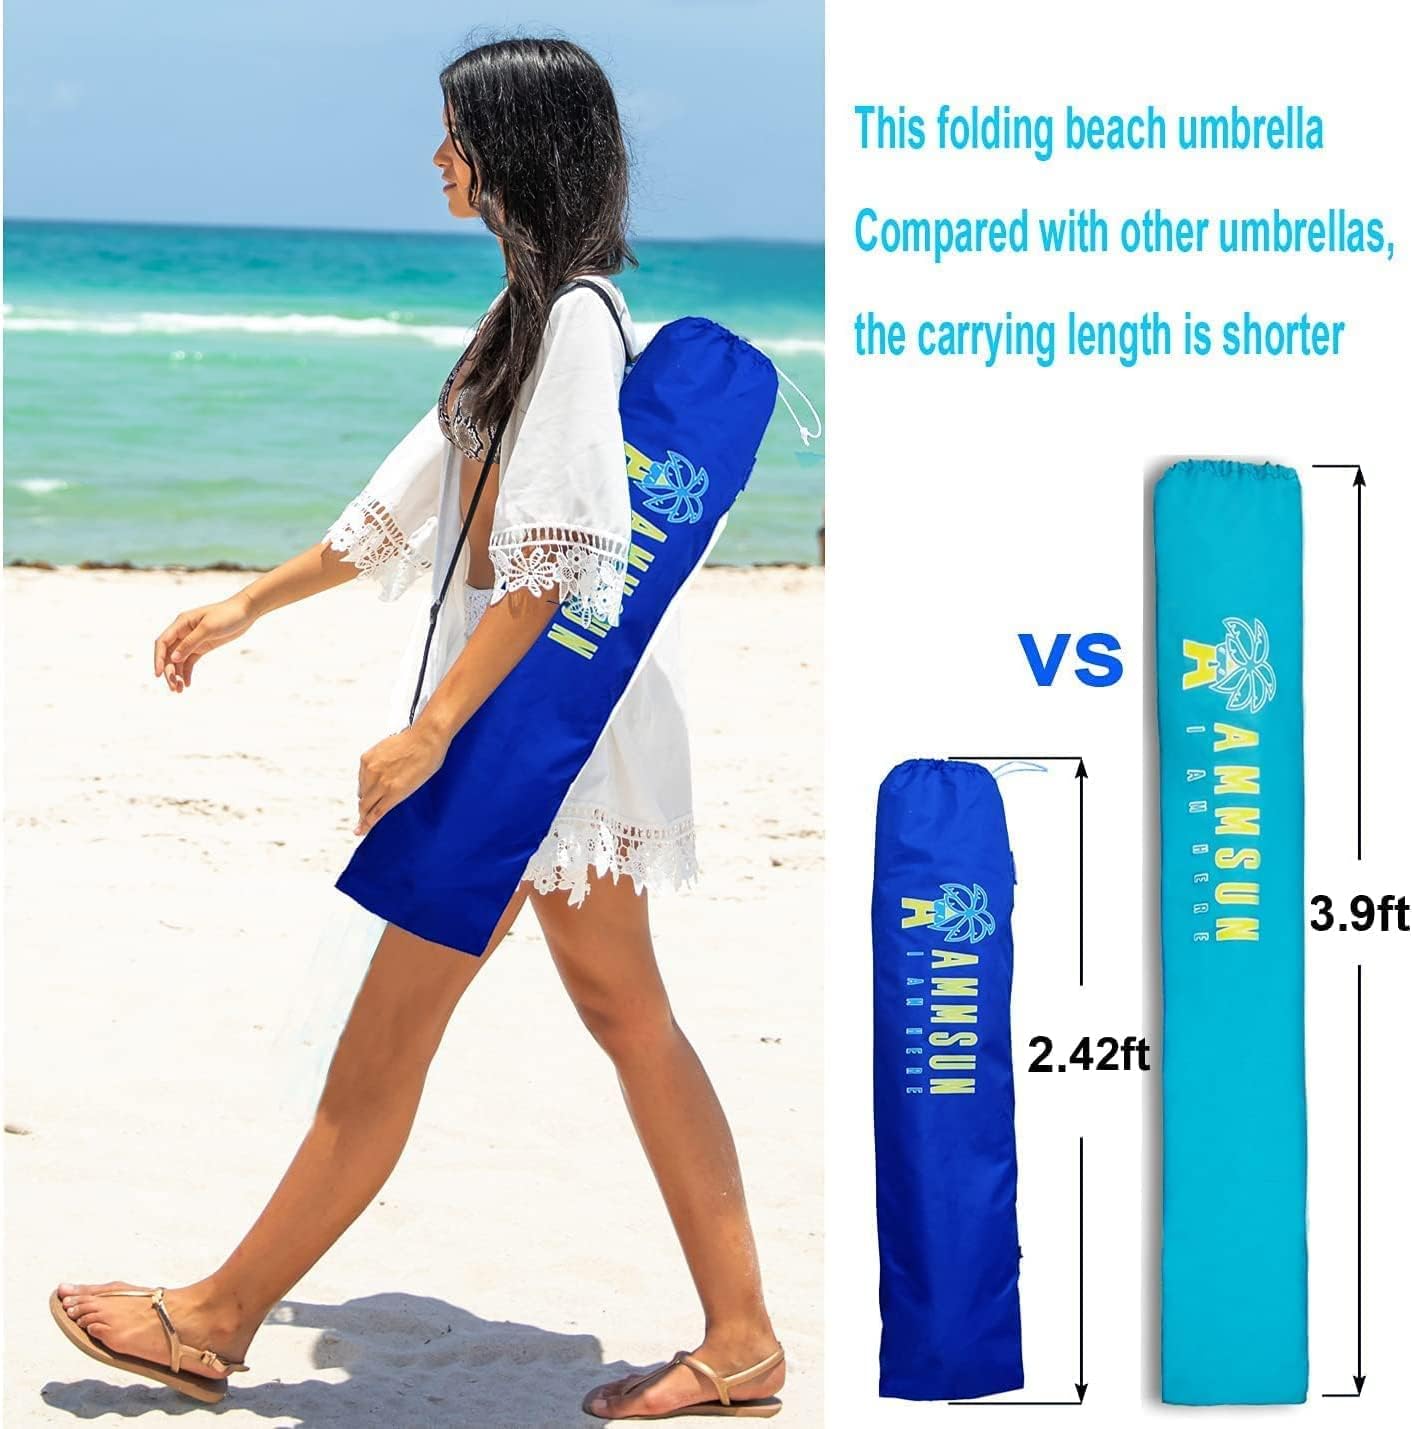 AMMSUN 6.5ft Portable Travel Folded Beach Umbrella Blue